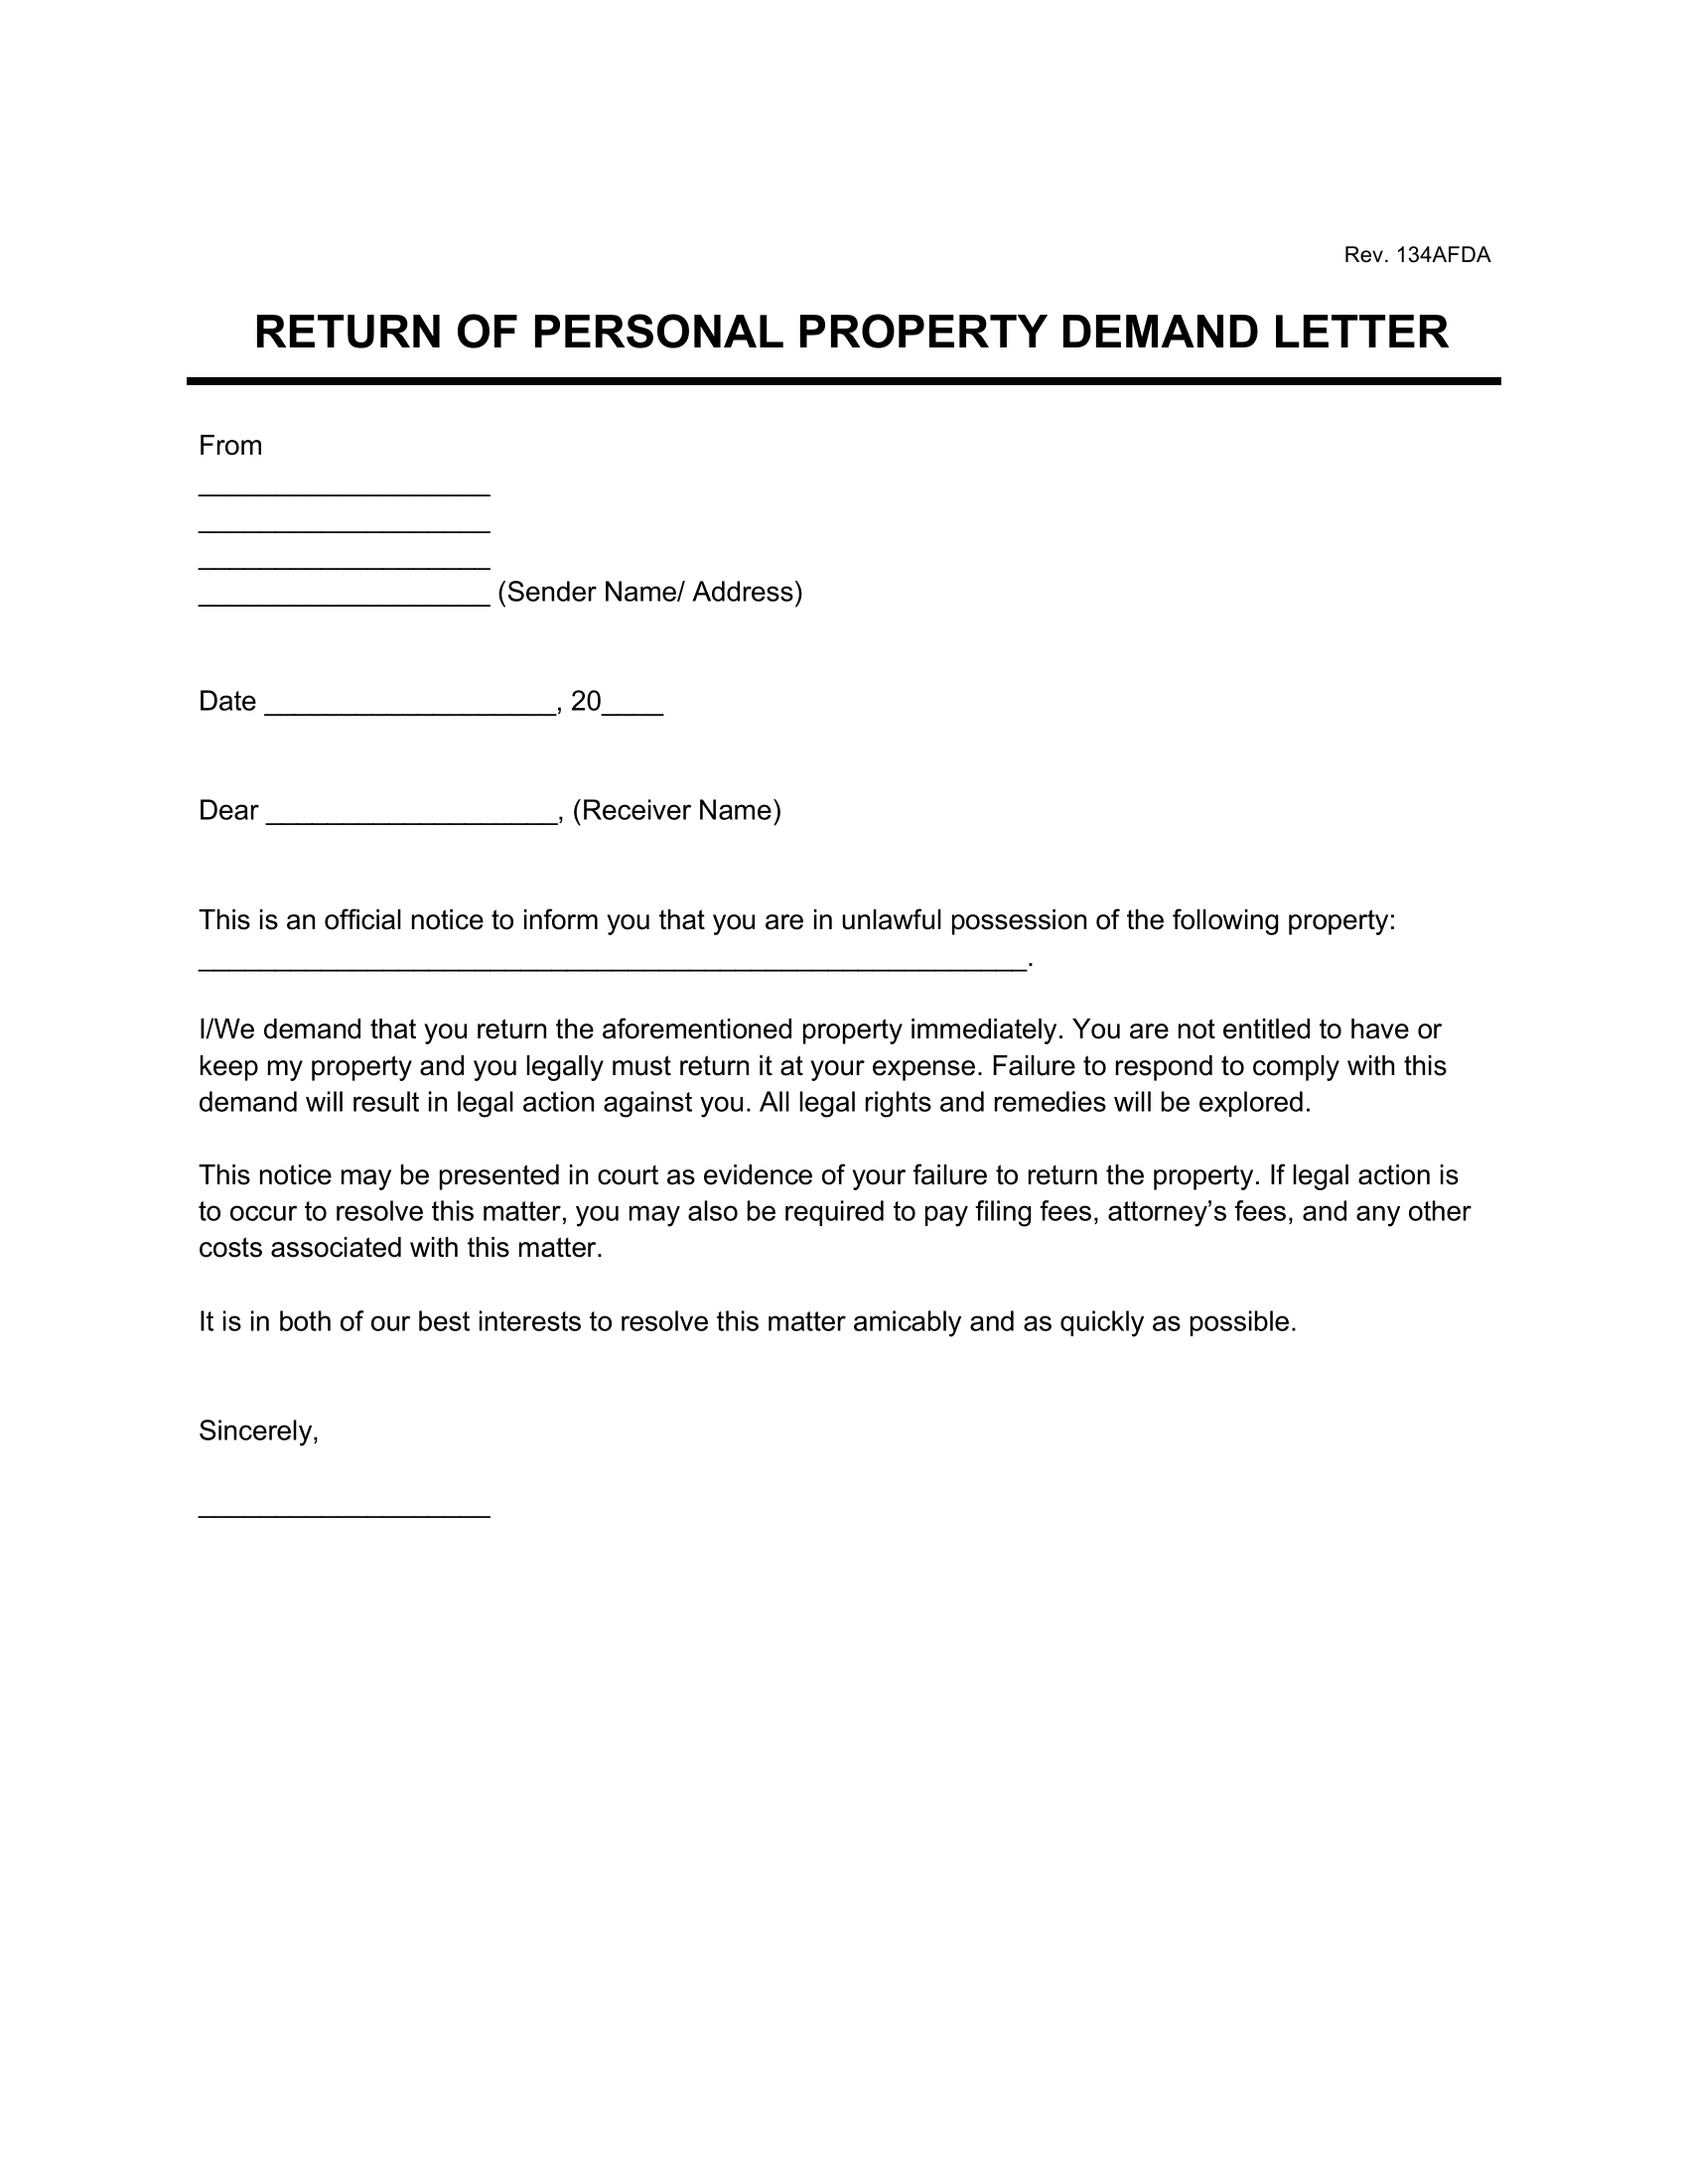 https://legaltemplates.net/wp-content/uploads/return-of-personal-property-demand-letter.png